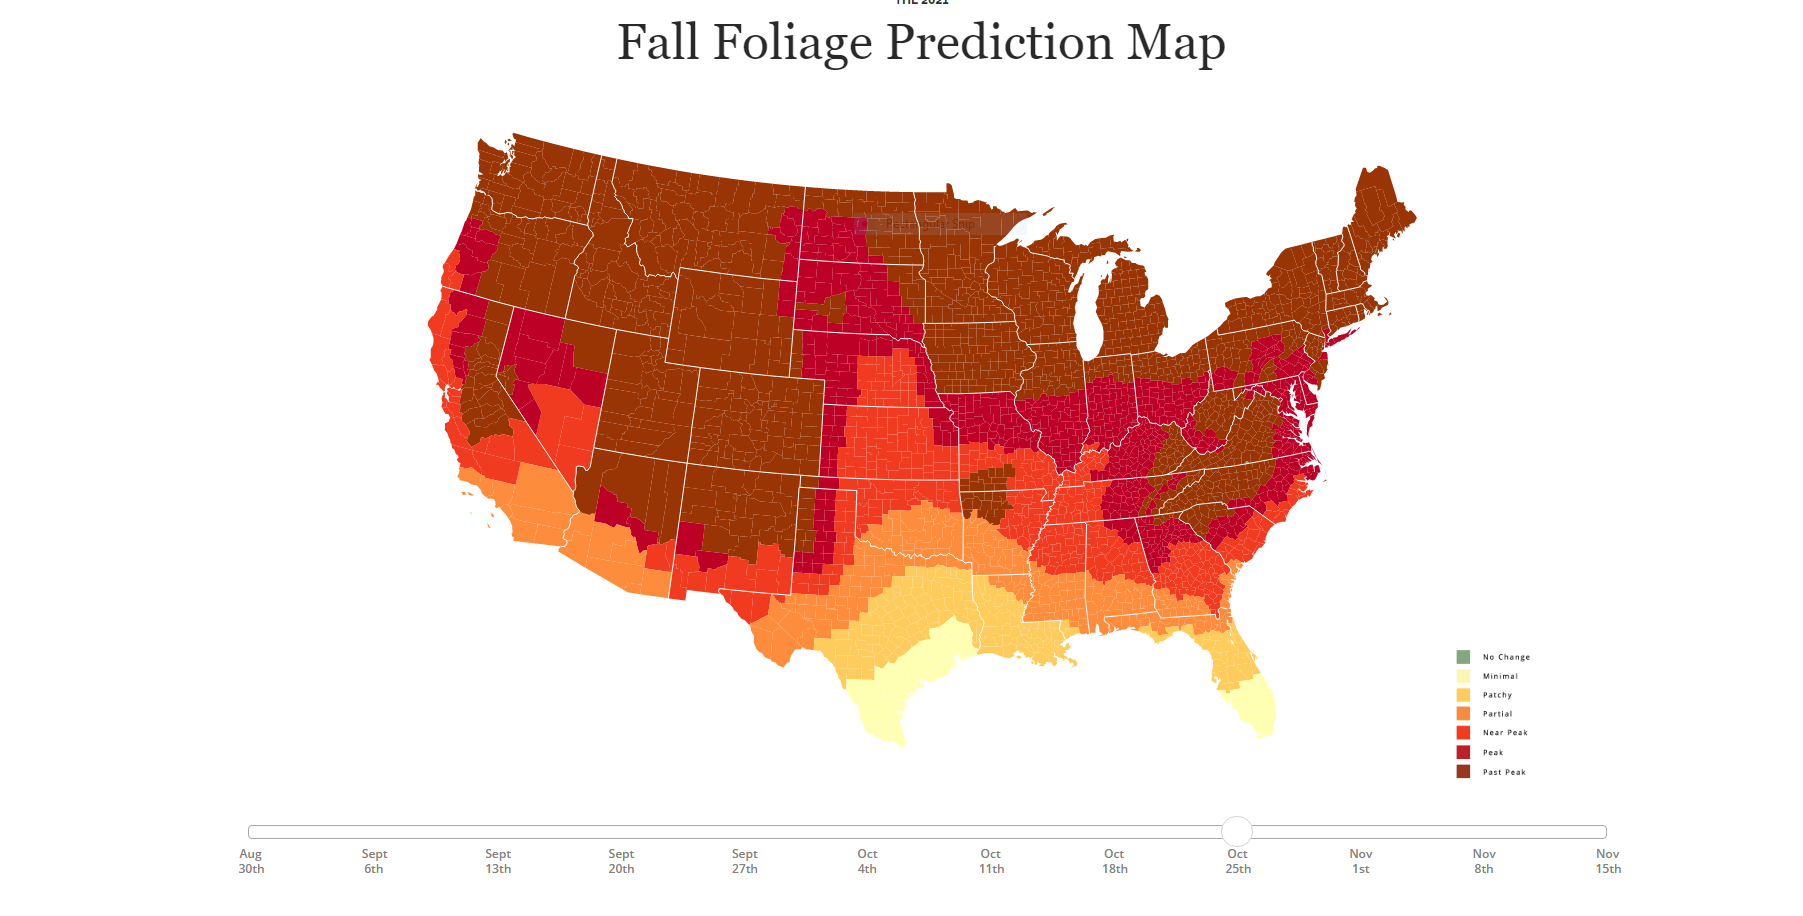 Fall Foliage Will Peak In MidOctober In Philadelphia Region, According